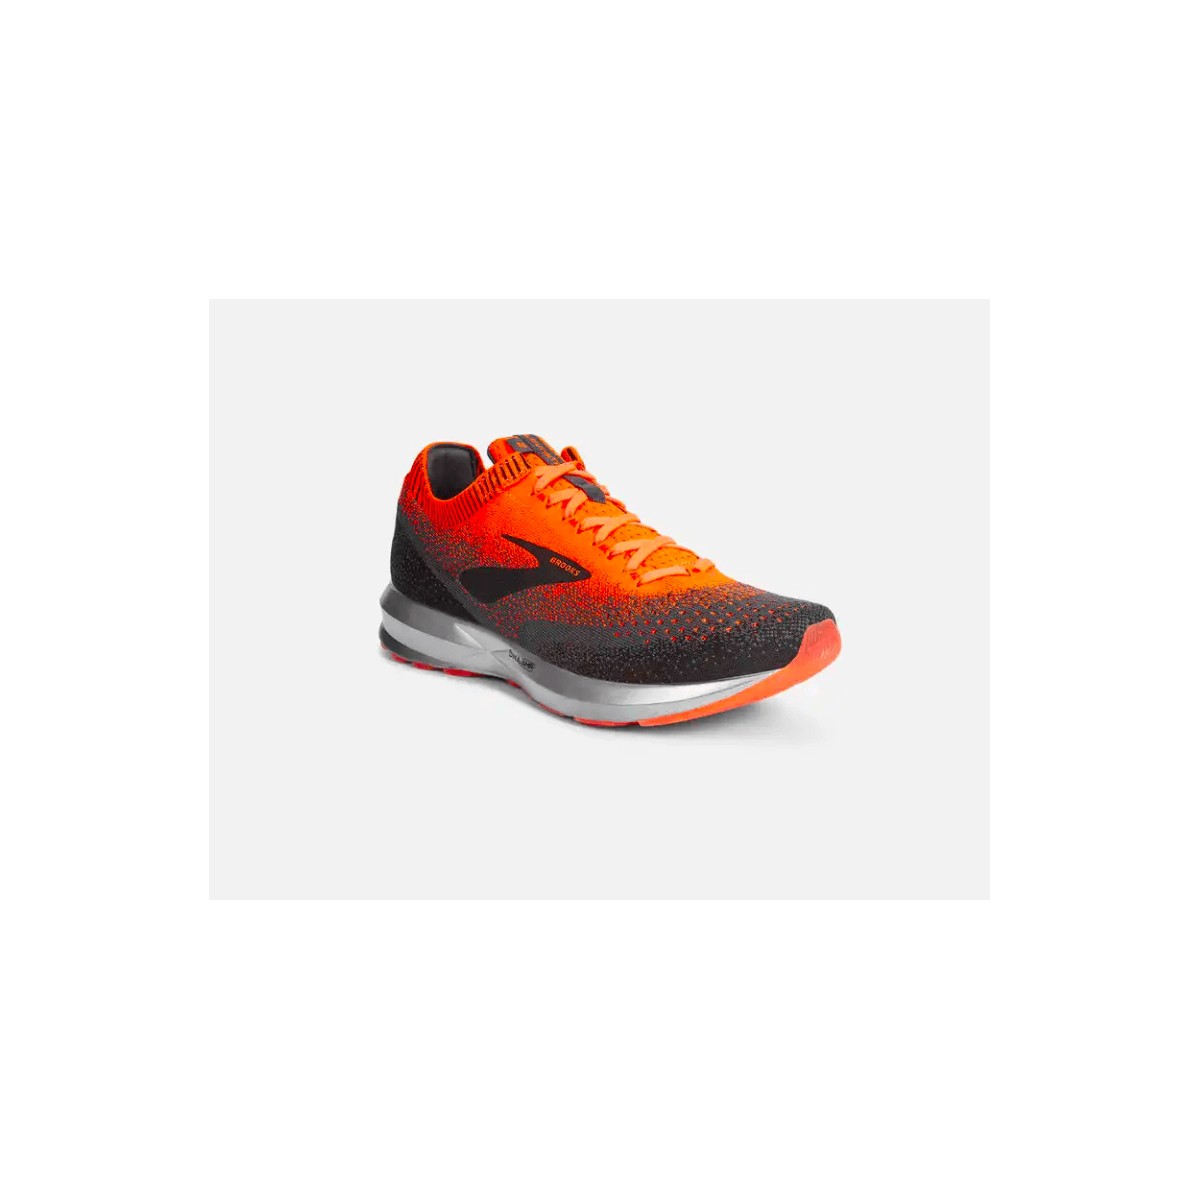 Brooks Levitate 2 Men's Running Shoes Orange Black AW19